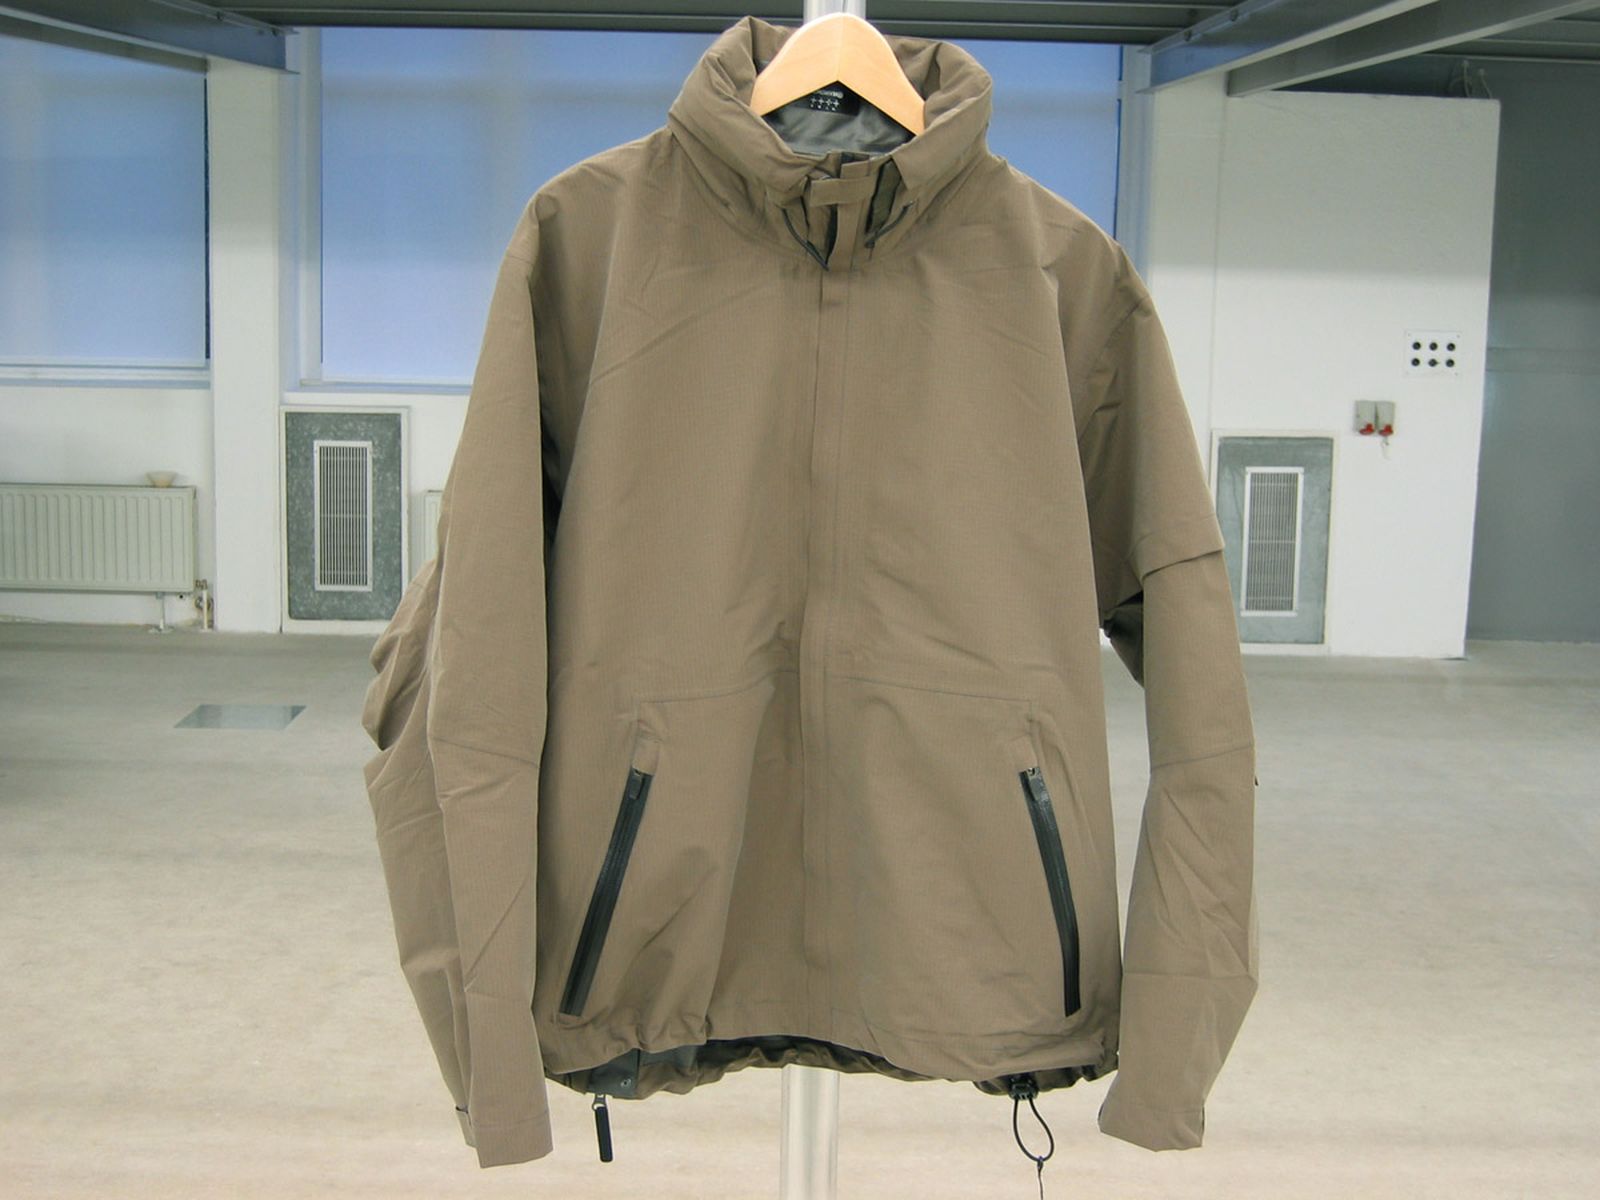 GT-J4 jacket, shot in ACRONYM's old Munich office (2004)